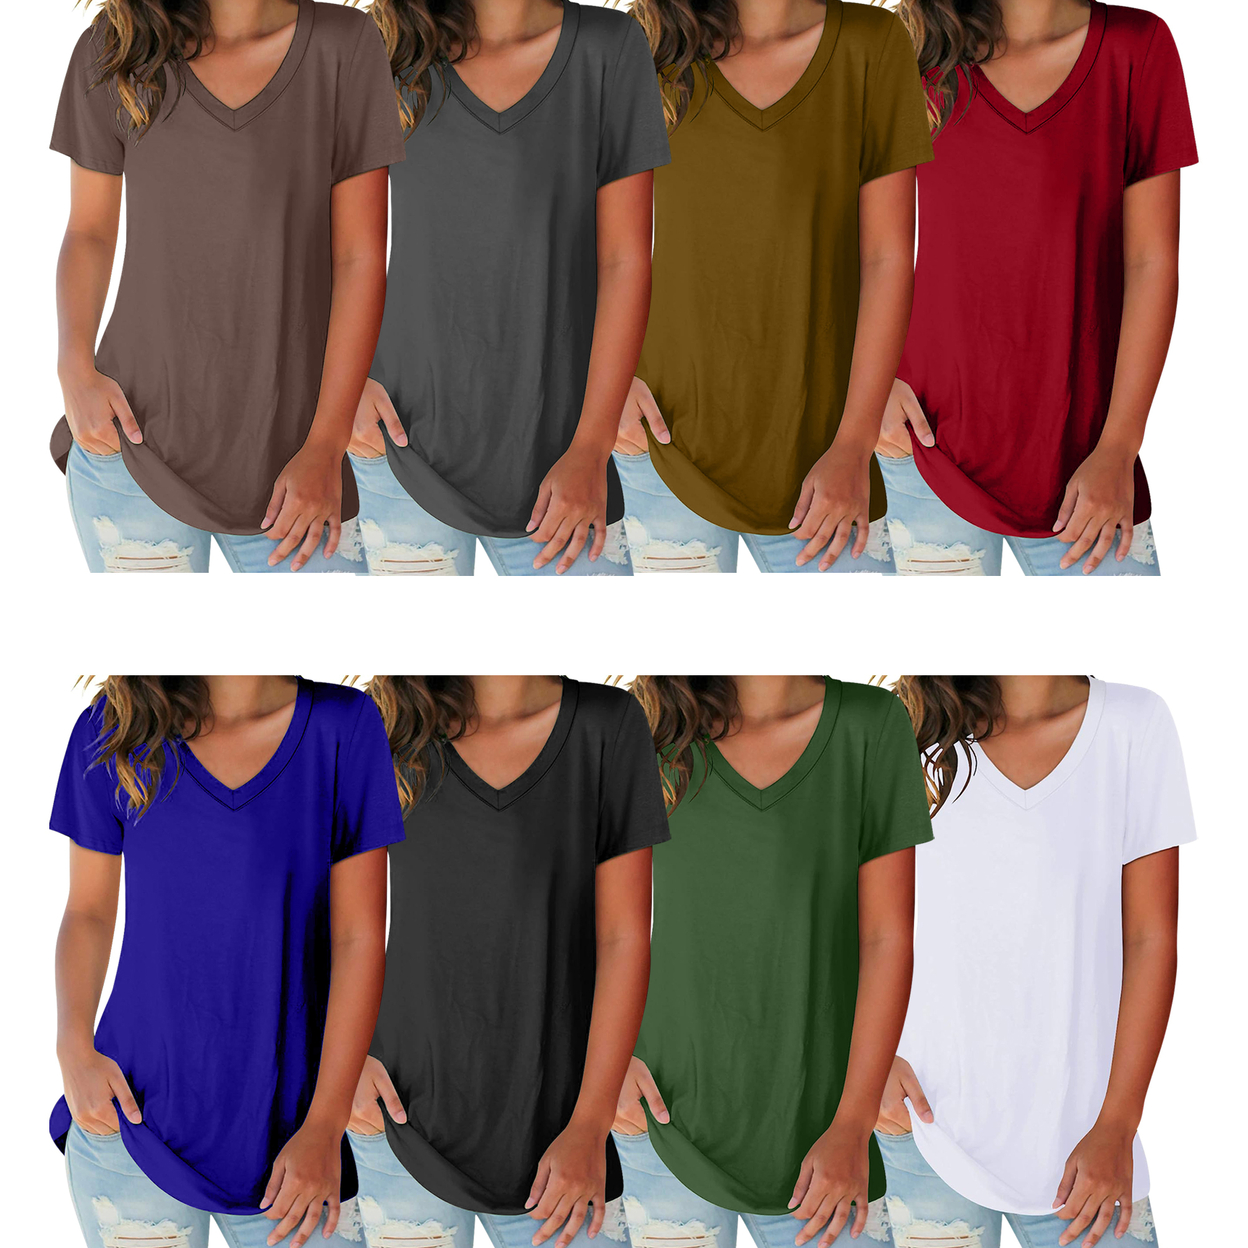 2-Pack: Women's Ultra Soft Smooth Cotton Blend Basic V-Neck Short Sleeve Shirts - White & Brown, Medium